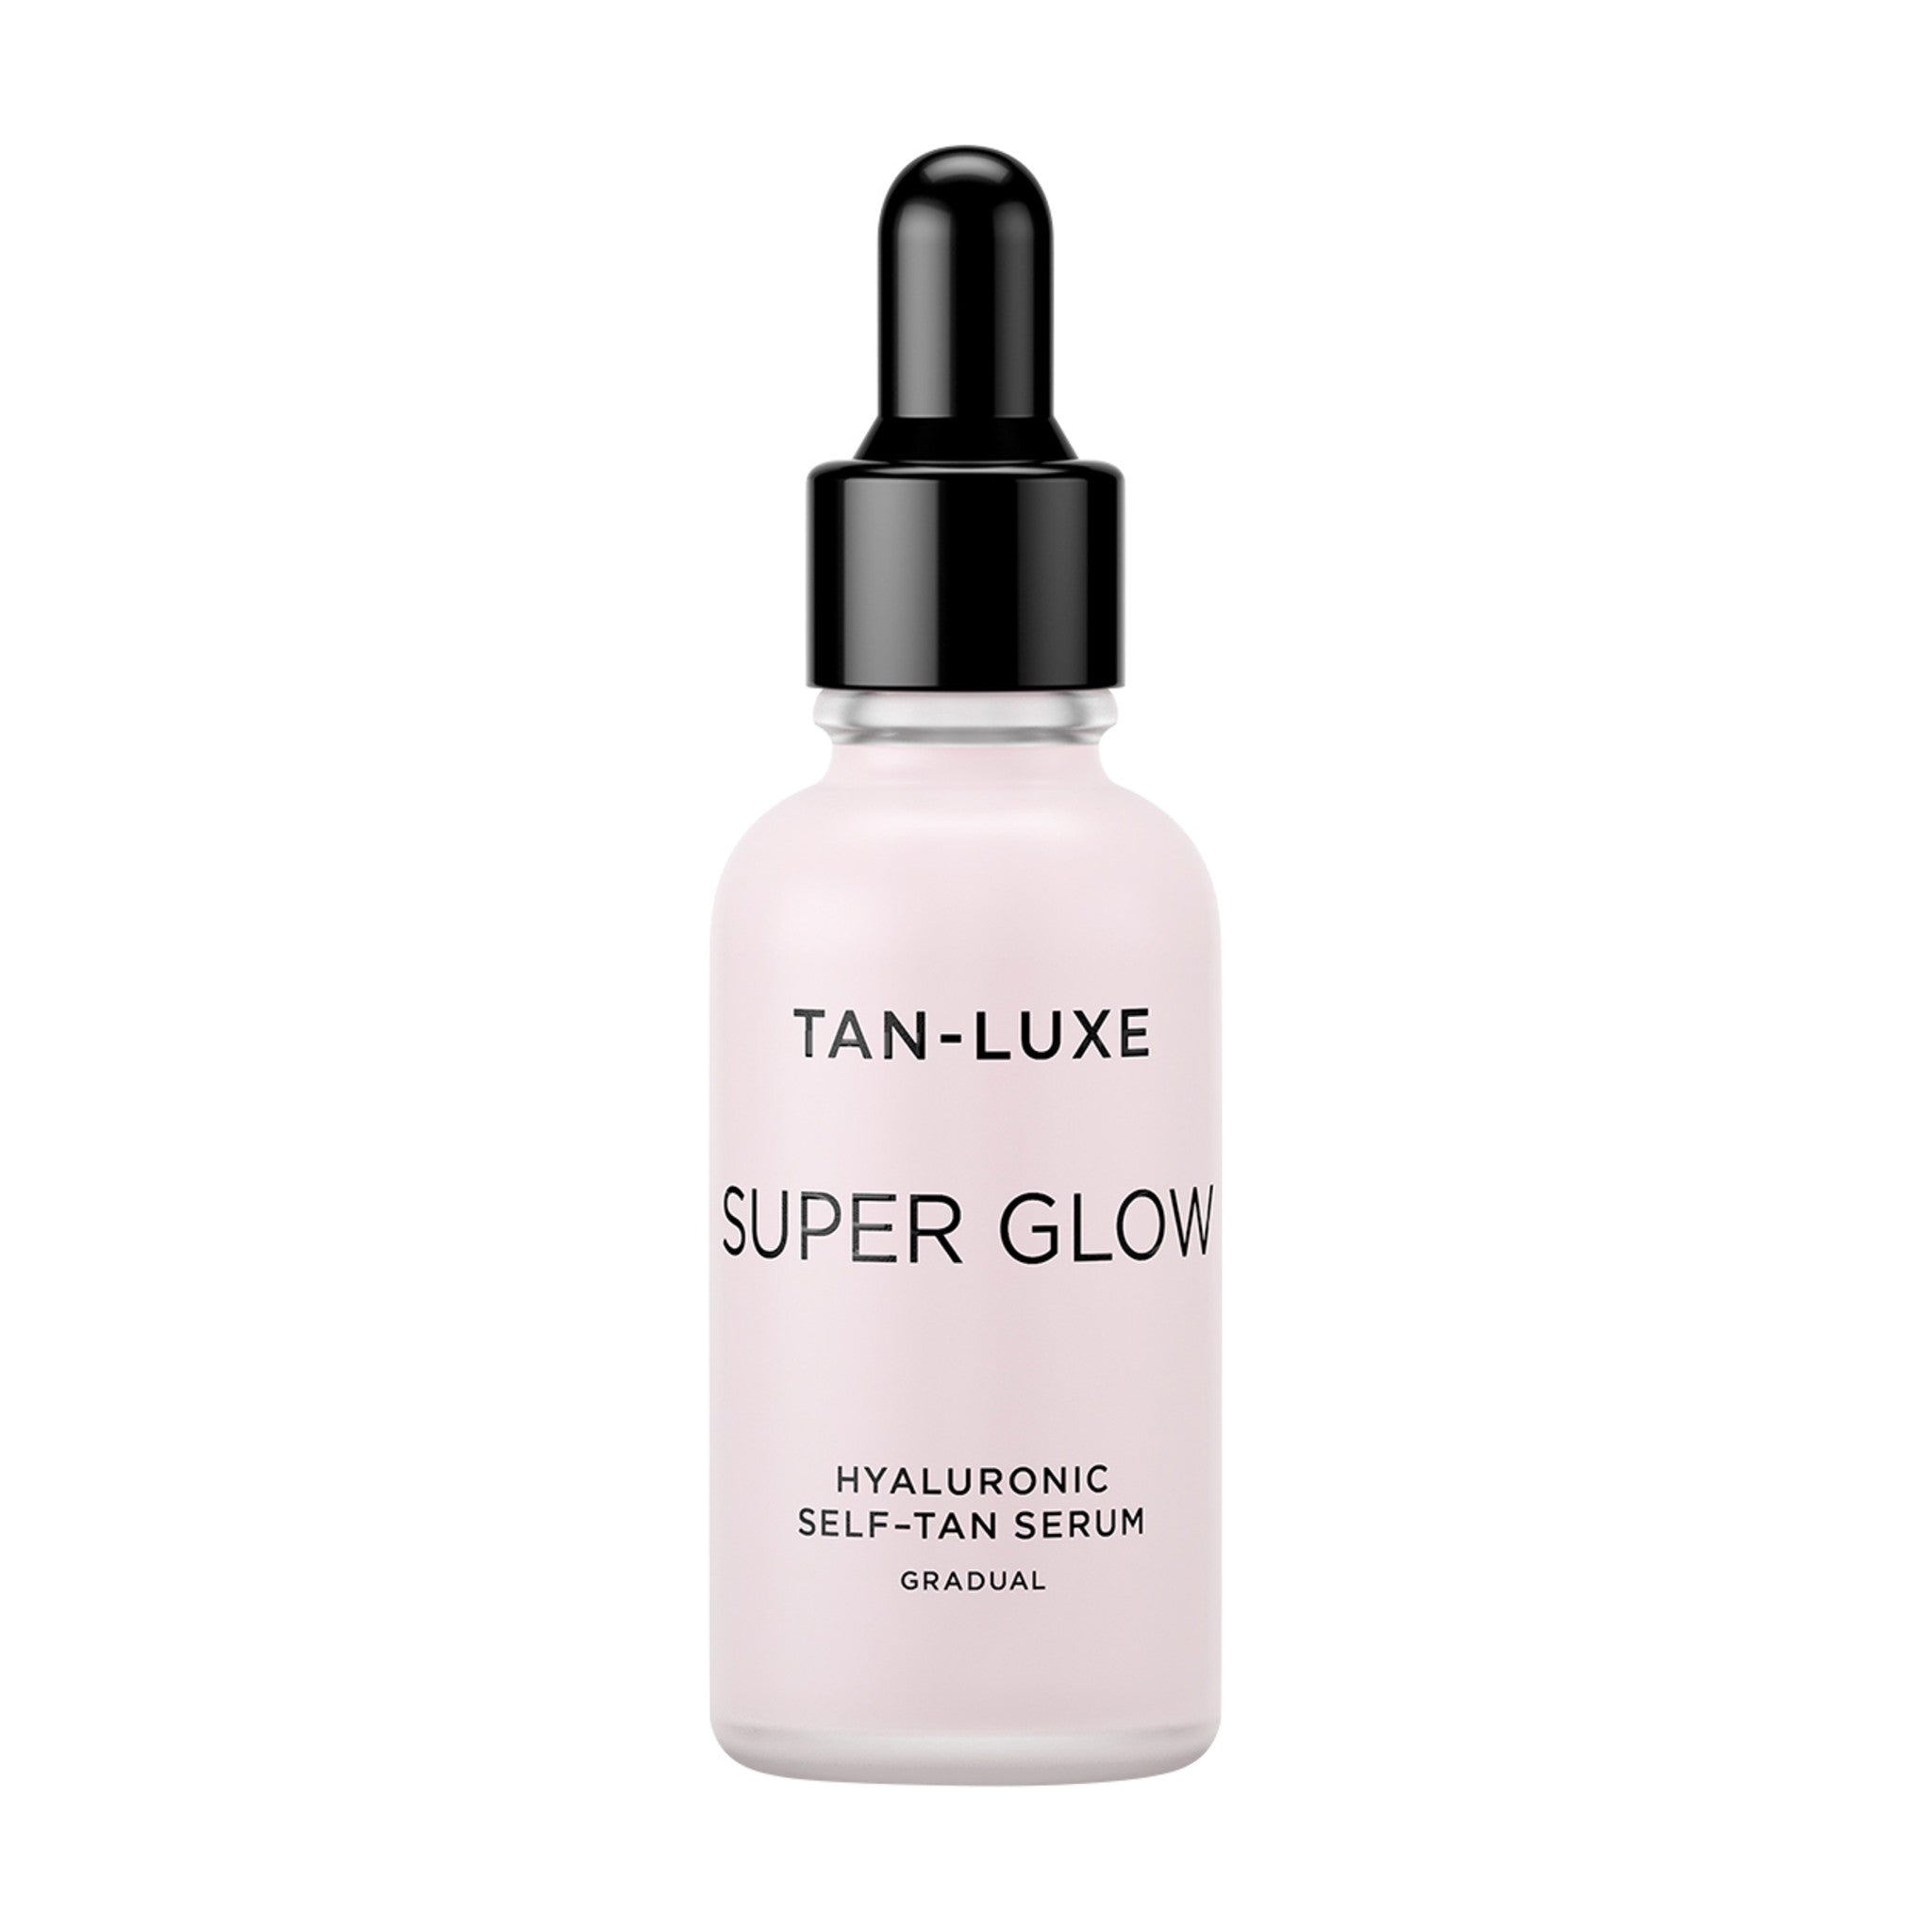 Tan-Luxe Super Glow Hyaluronic Self Tan Serum Size variant: 1 oz | 30 ml main image.